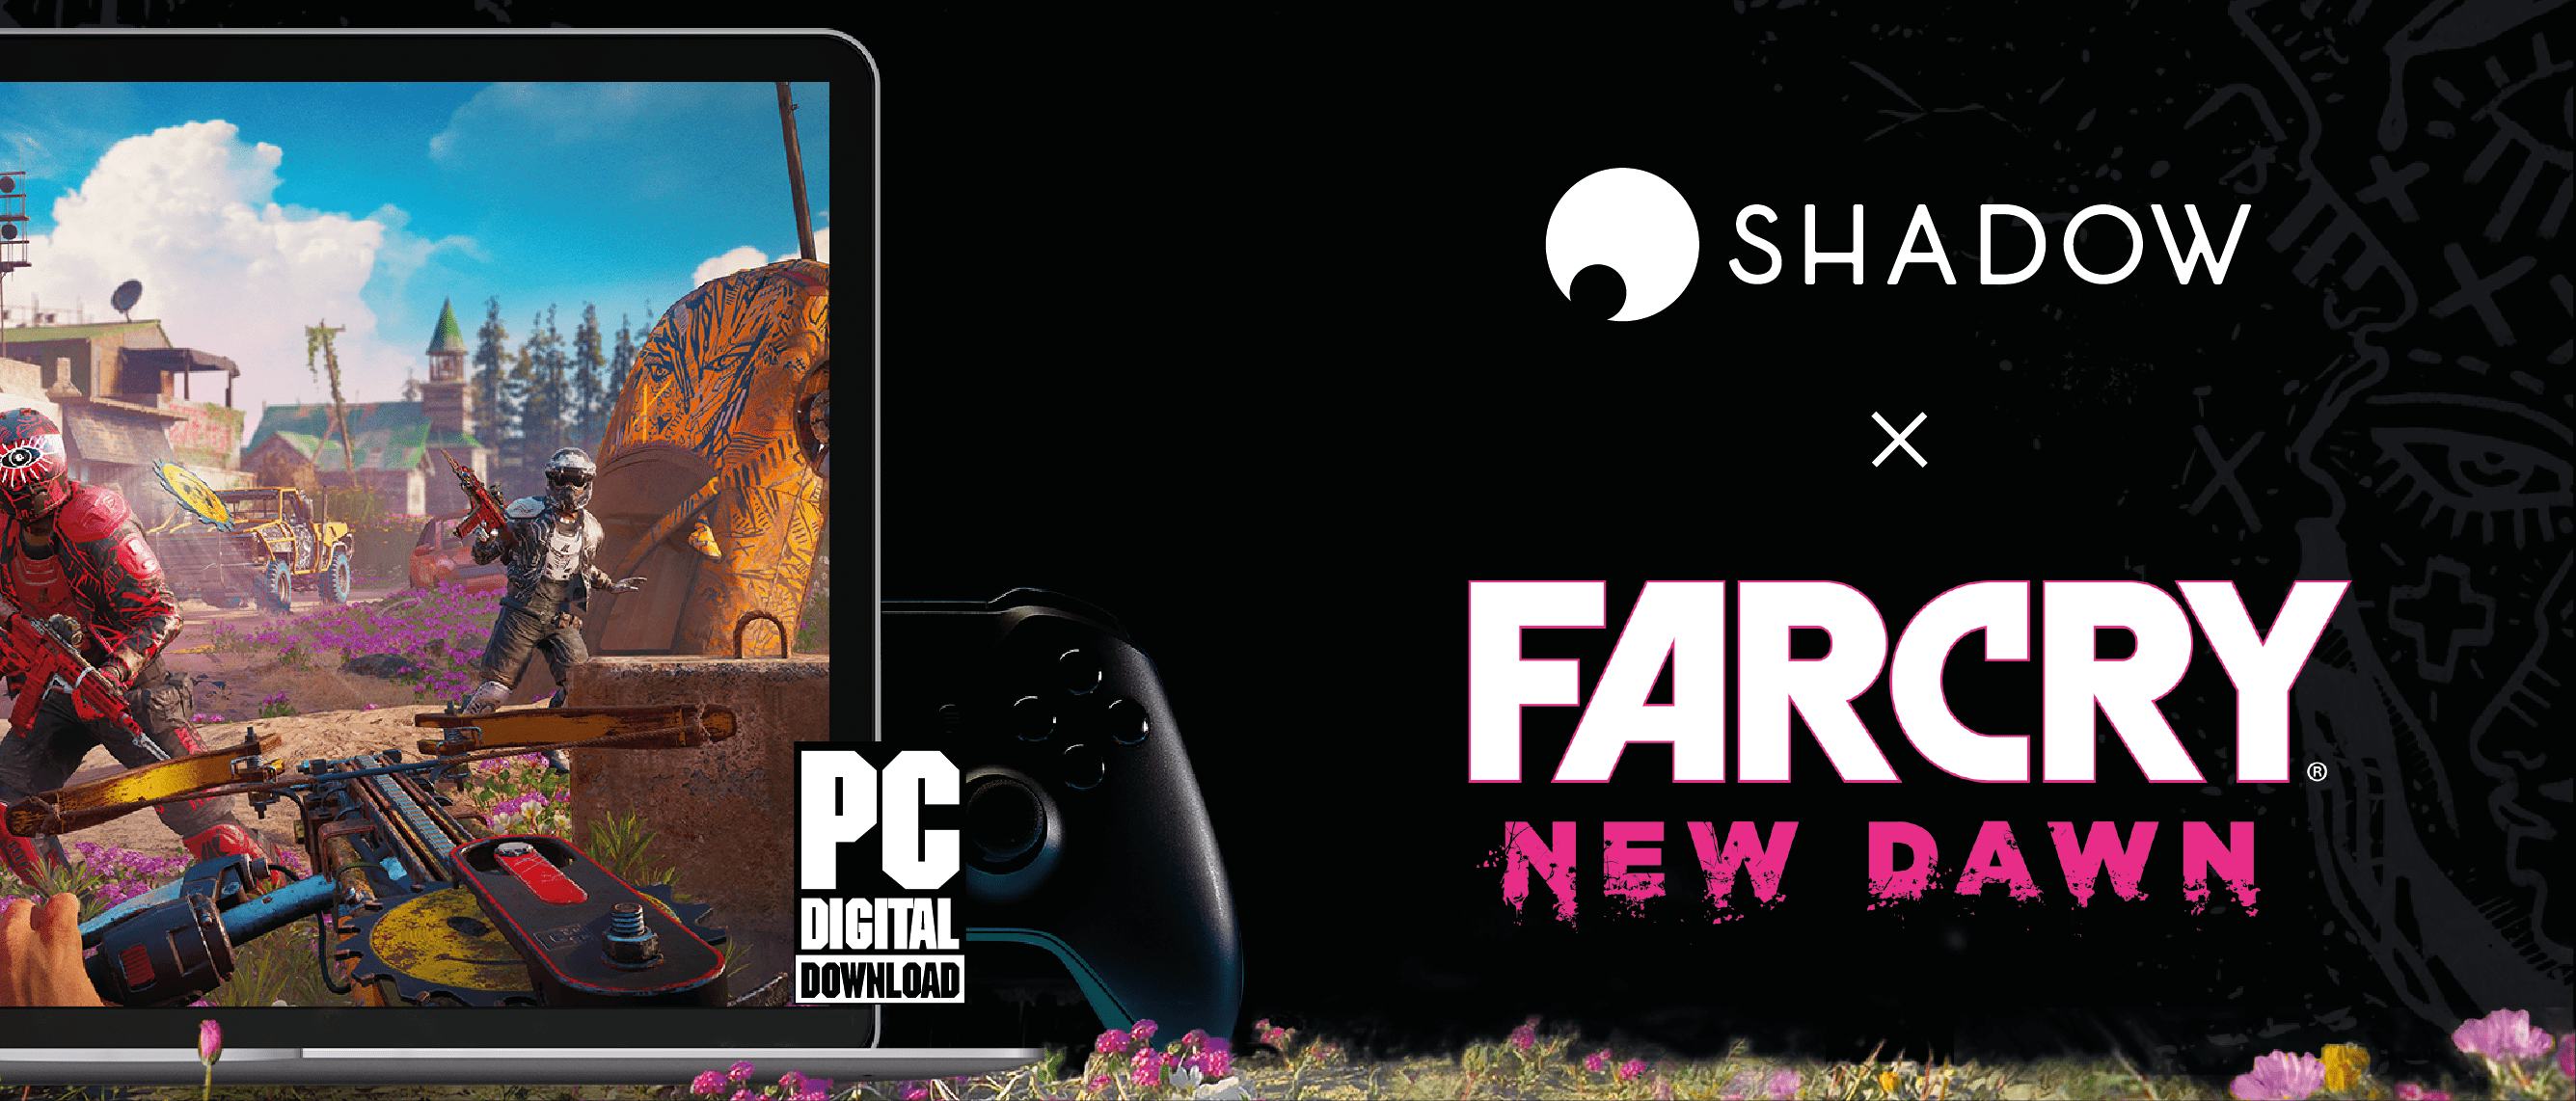 Get free Far Cry® New Dawn copy with Shadow subscription